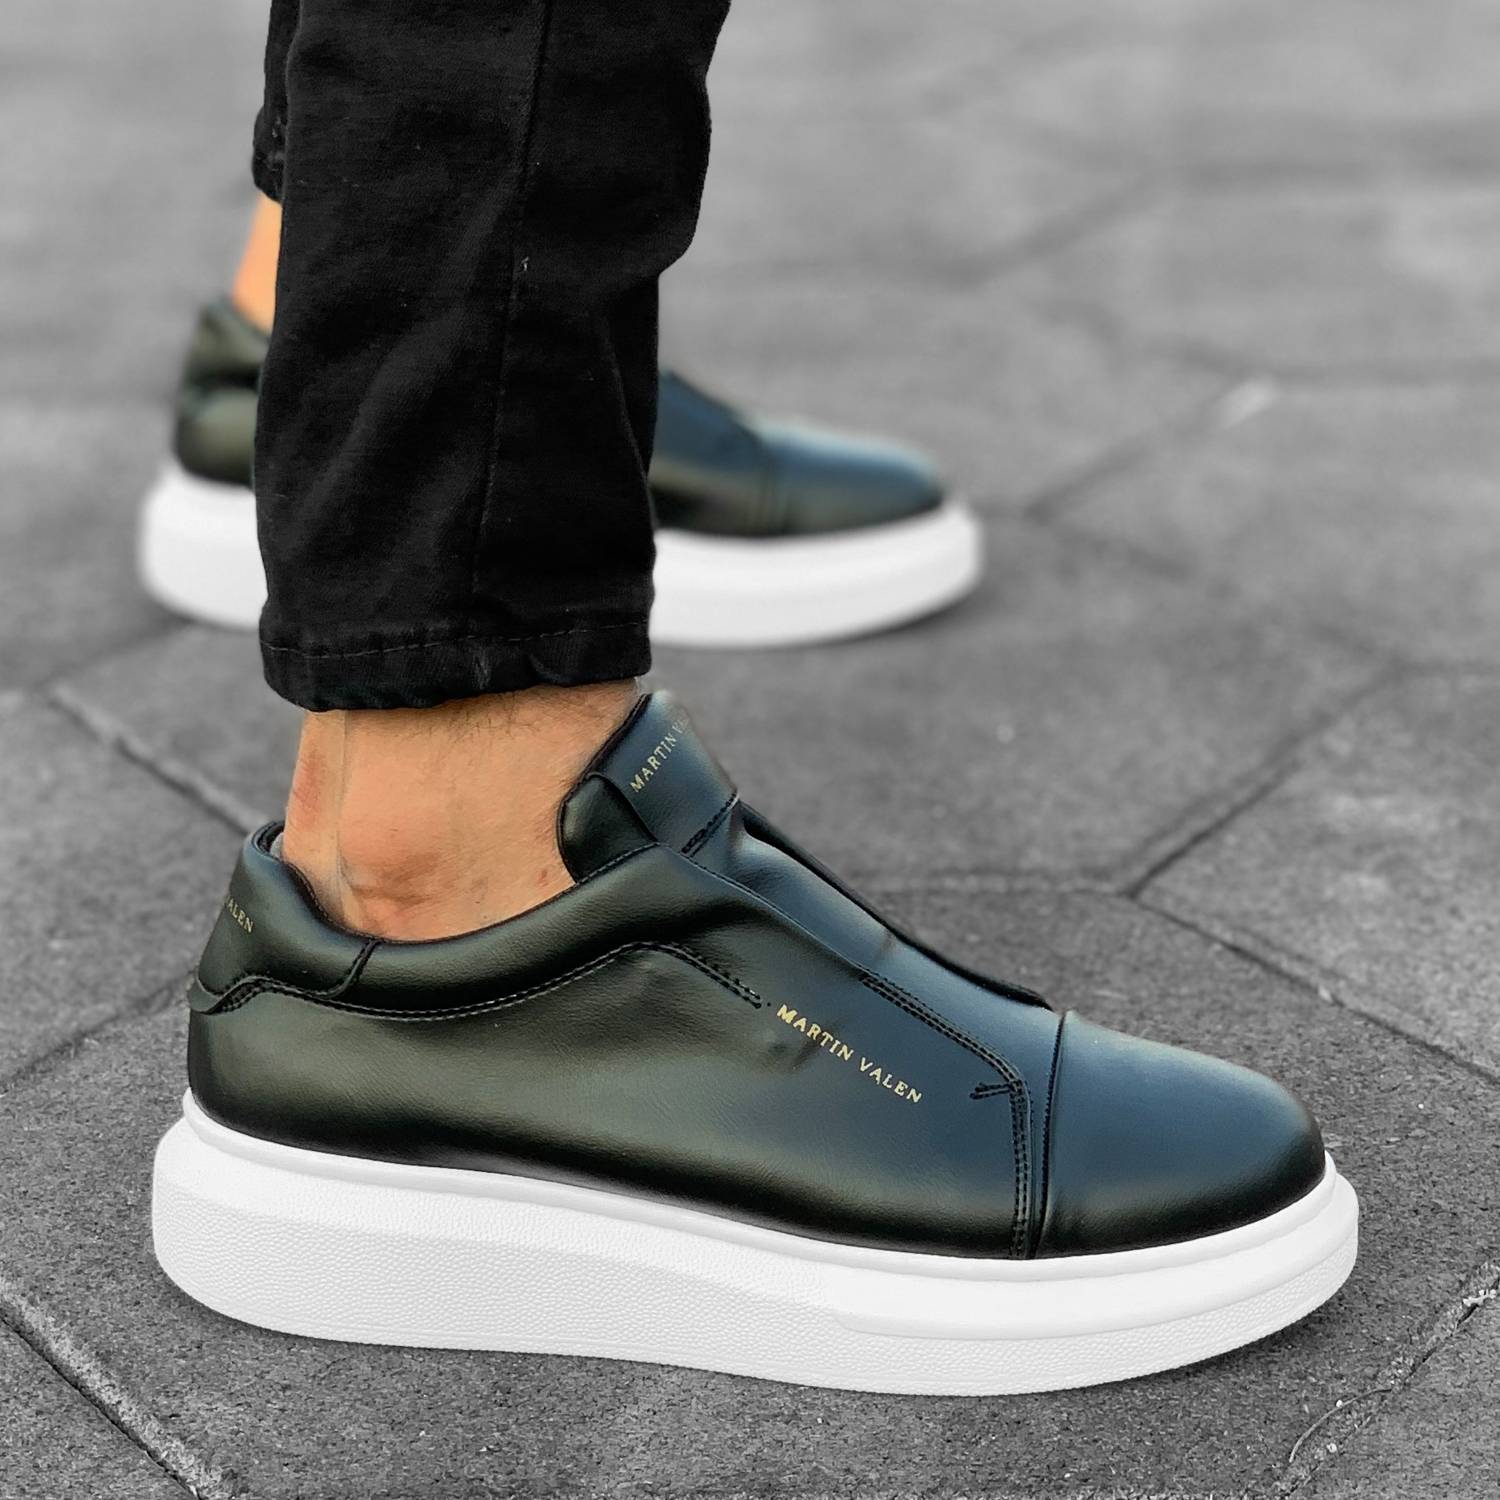 MartinValen Slip-on Sneakers in Black&White